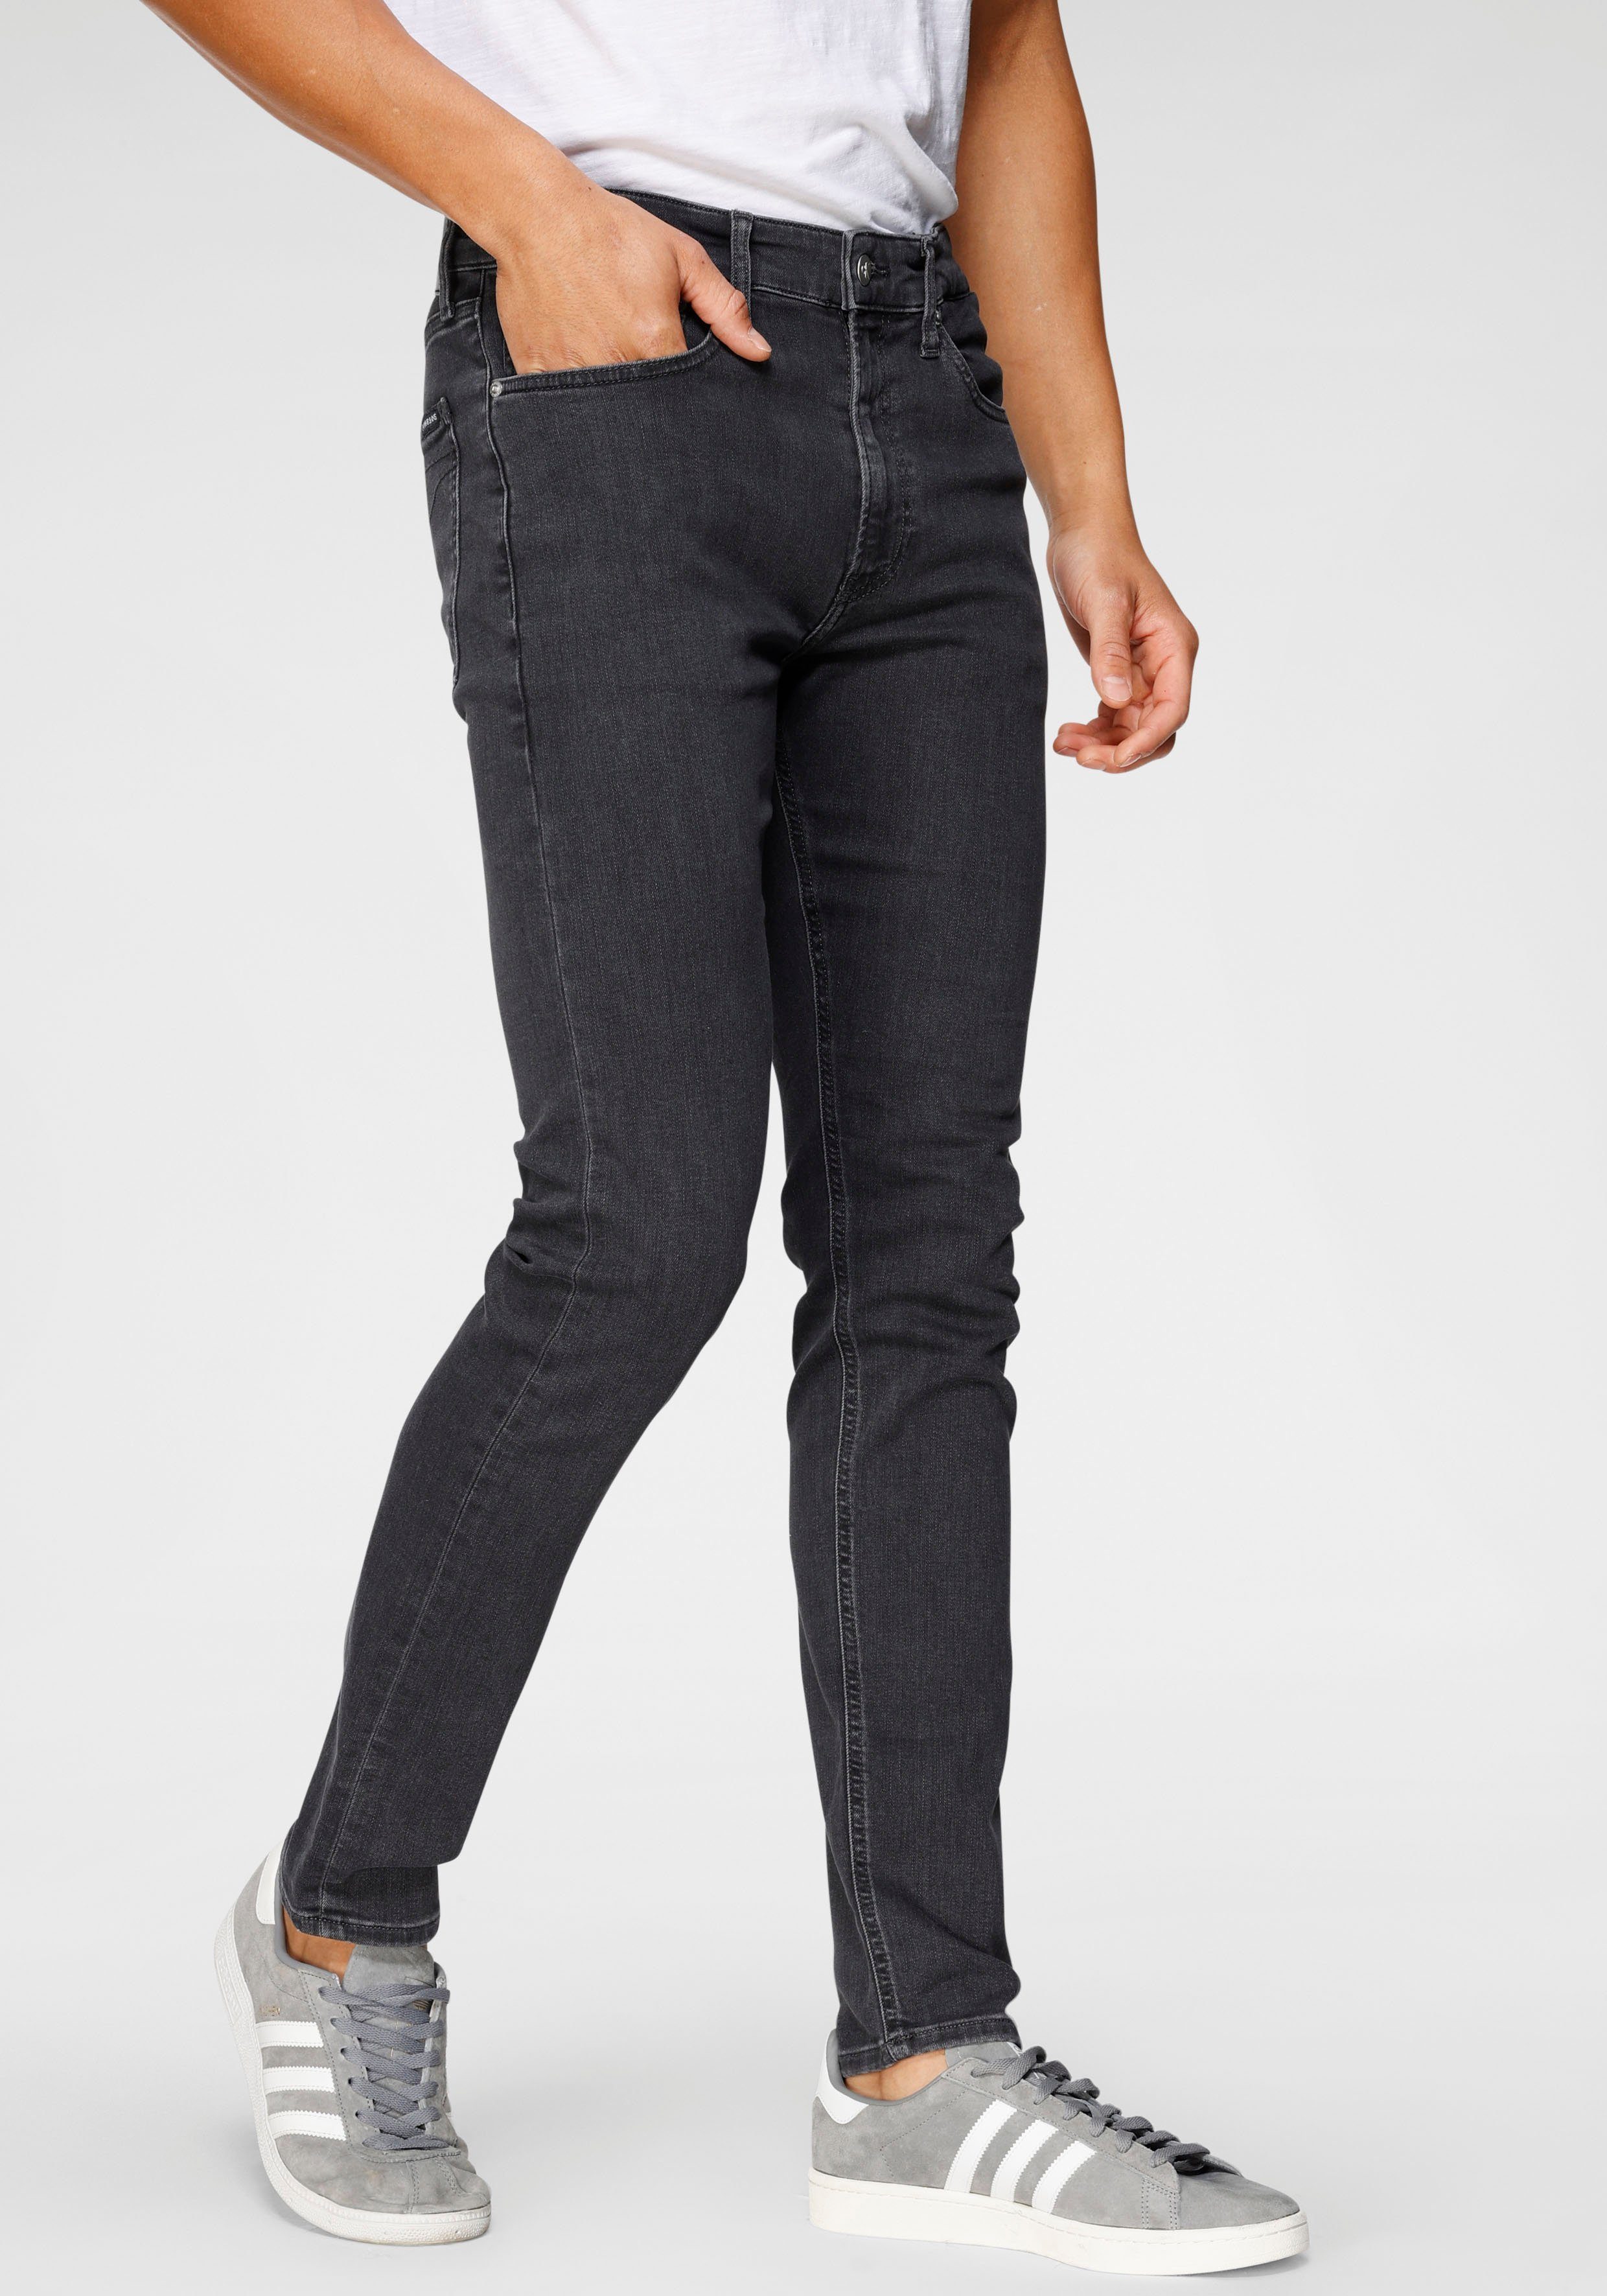 Waschung SKINNY Skinny-fit-Jeans Calvin CKJ Jeans modische black-wash 016 Klein